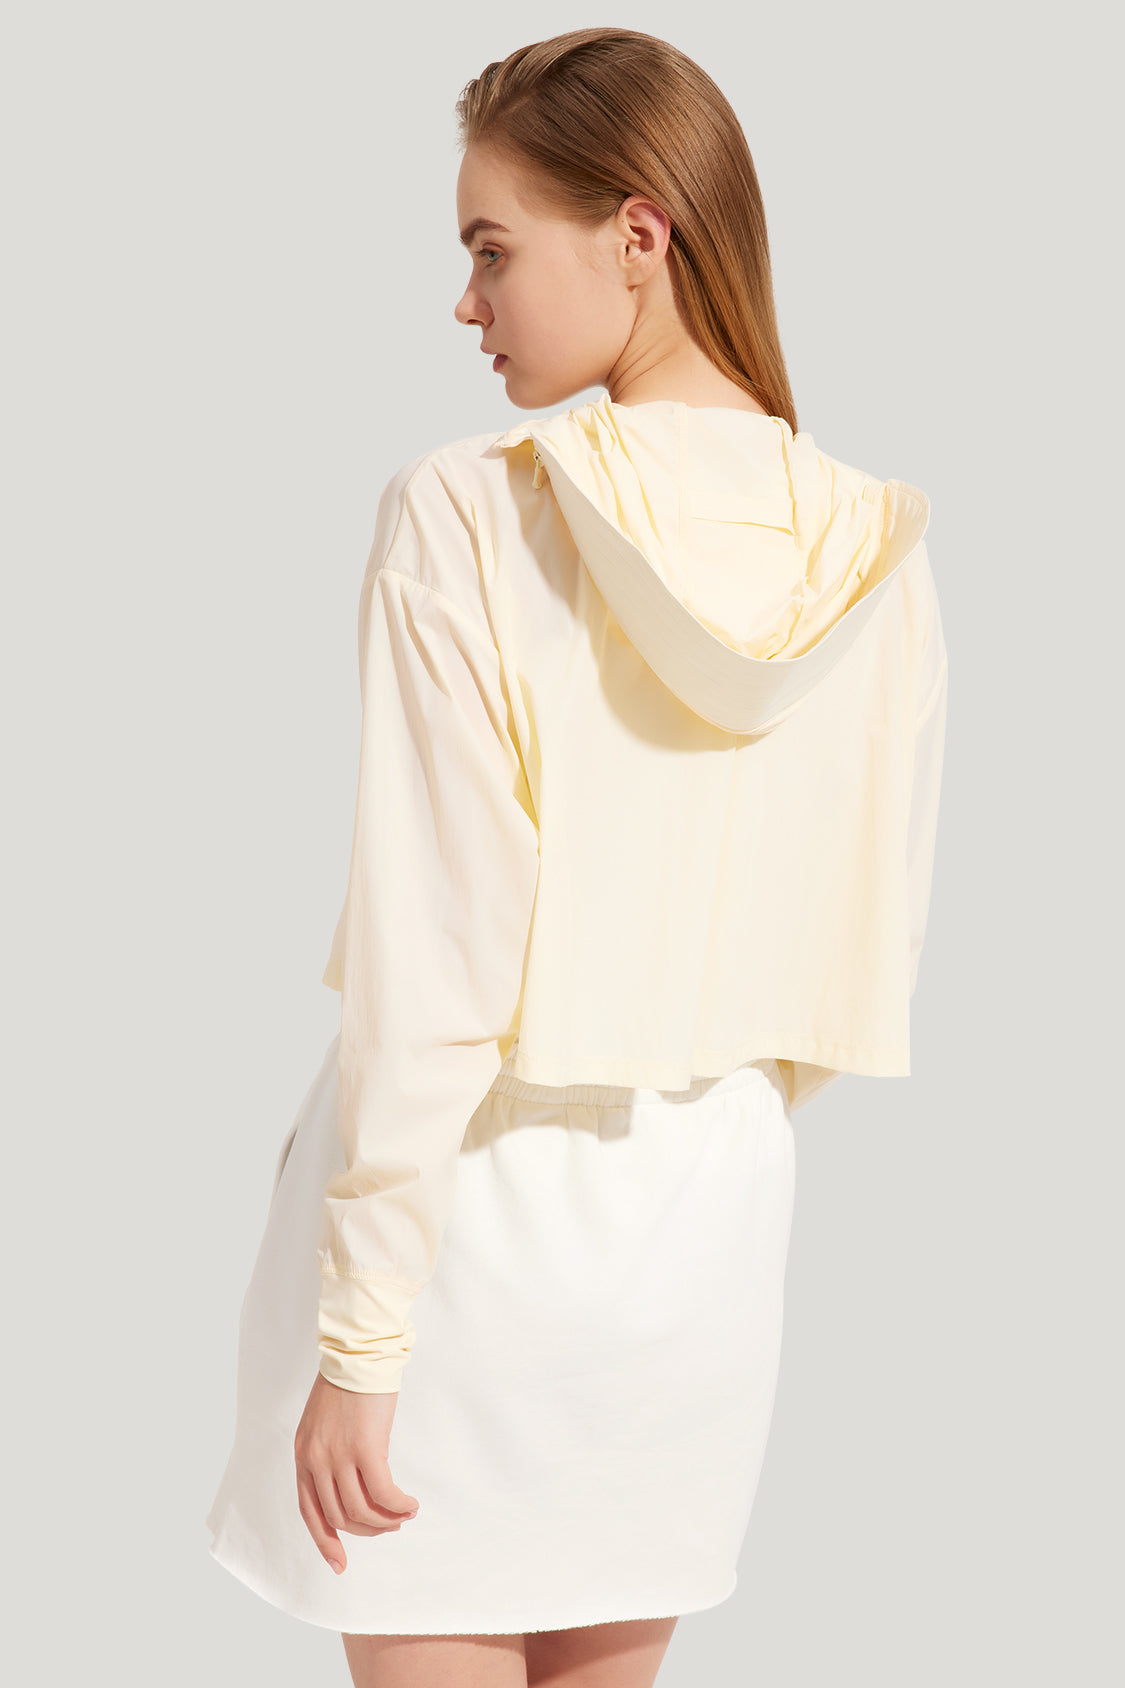 beneunder lightweight uv sun protection jacket hoodie #color_creamy yellow